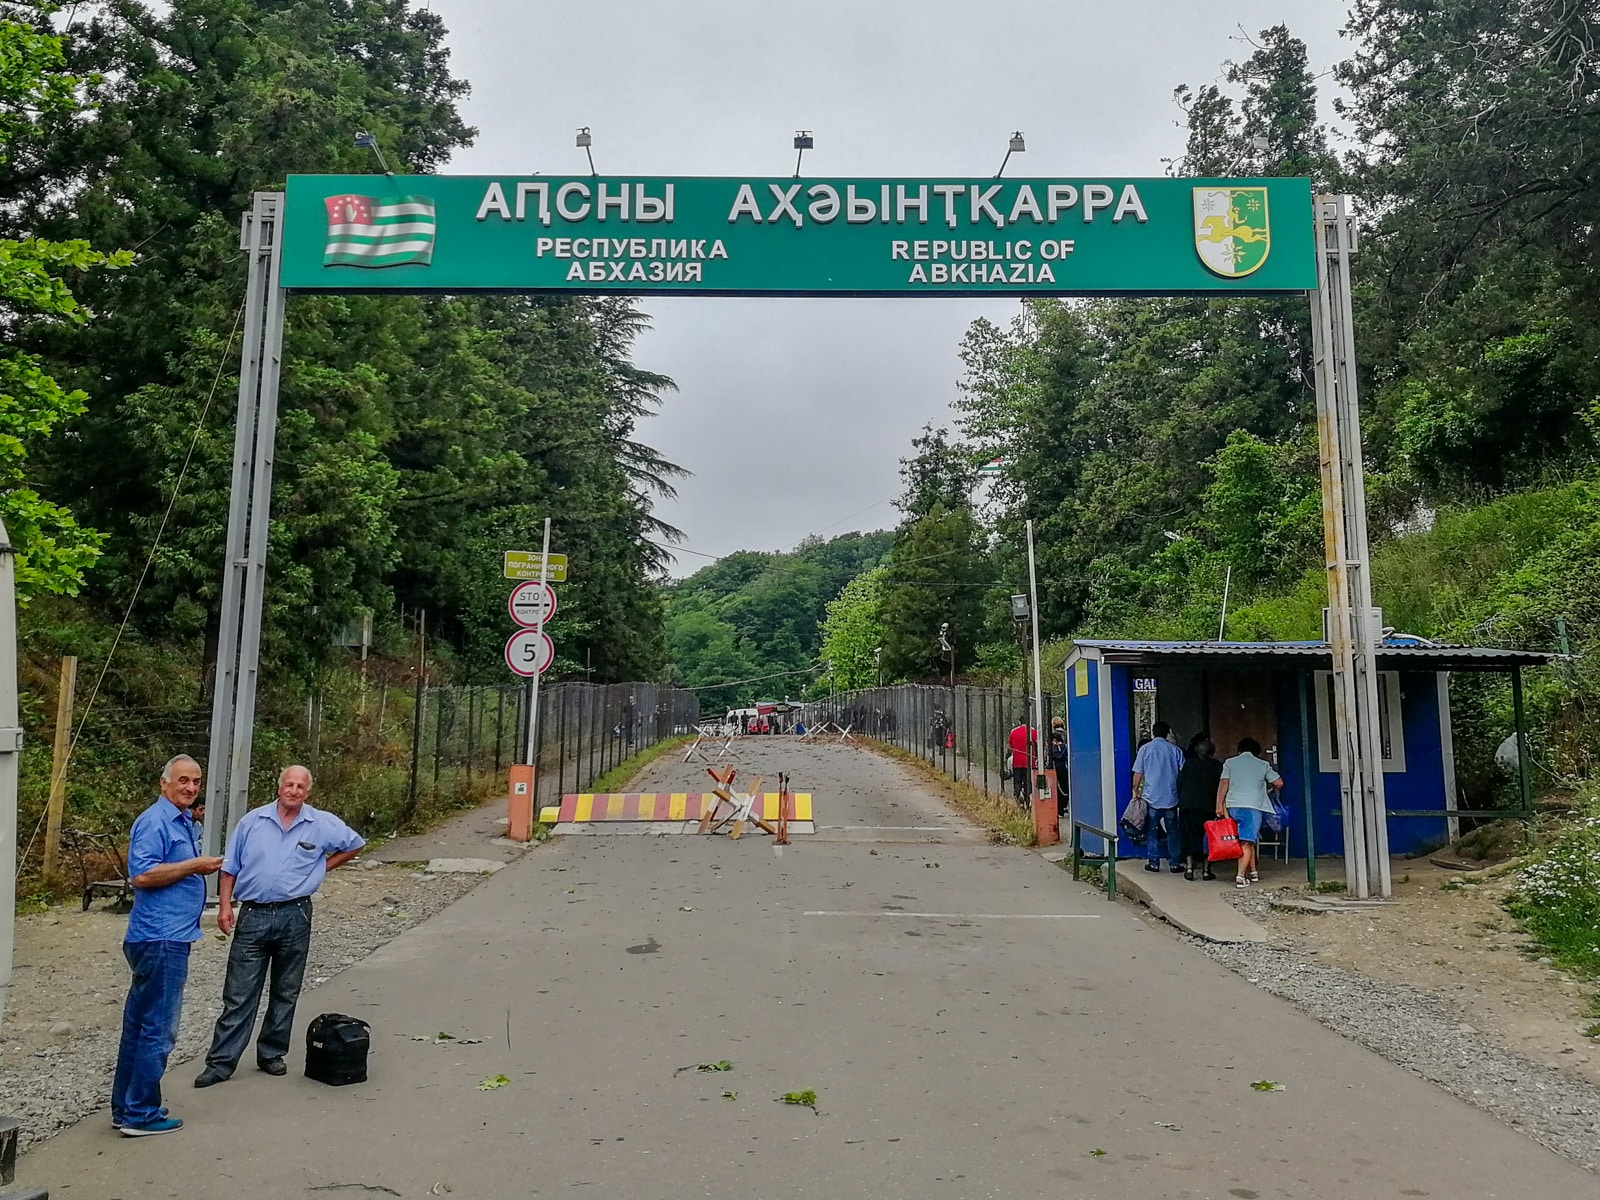 Abkhazia border crossing